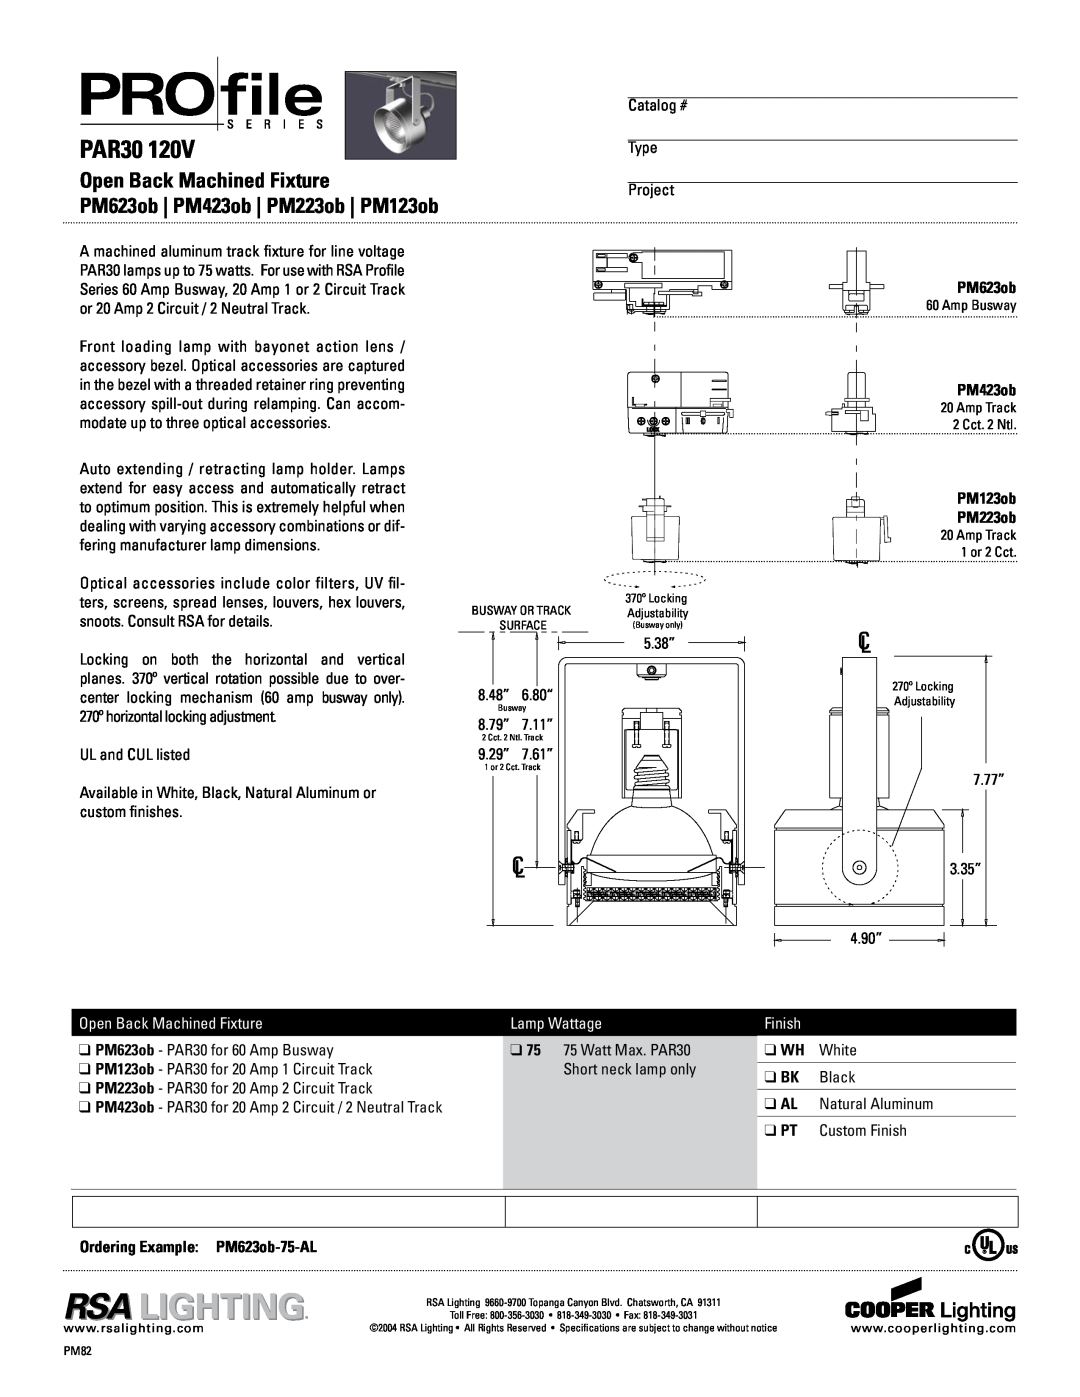 Cooper Lighting specifications PAR30, Open Back Machined Fixture, PM623ob PM423ob PM223ob PM123ob, Lamp Wattage, Finish 